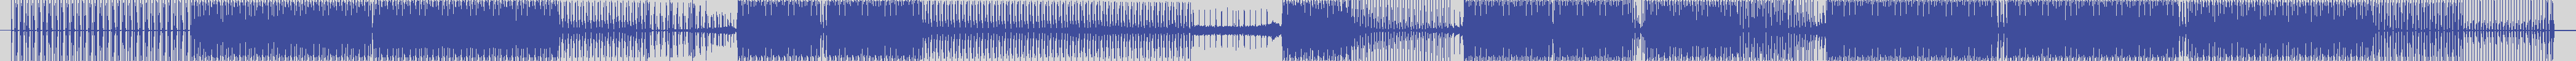 atomic_recordings [AR019] Mike Spaccavento - Rebound [Original Mix] audio wave form